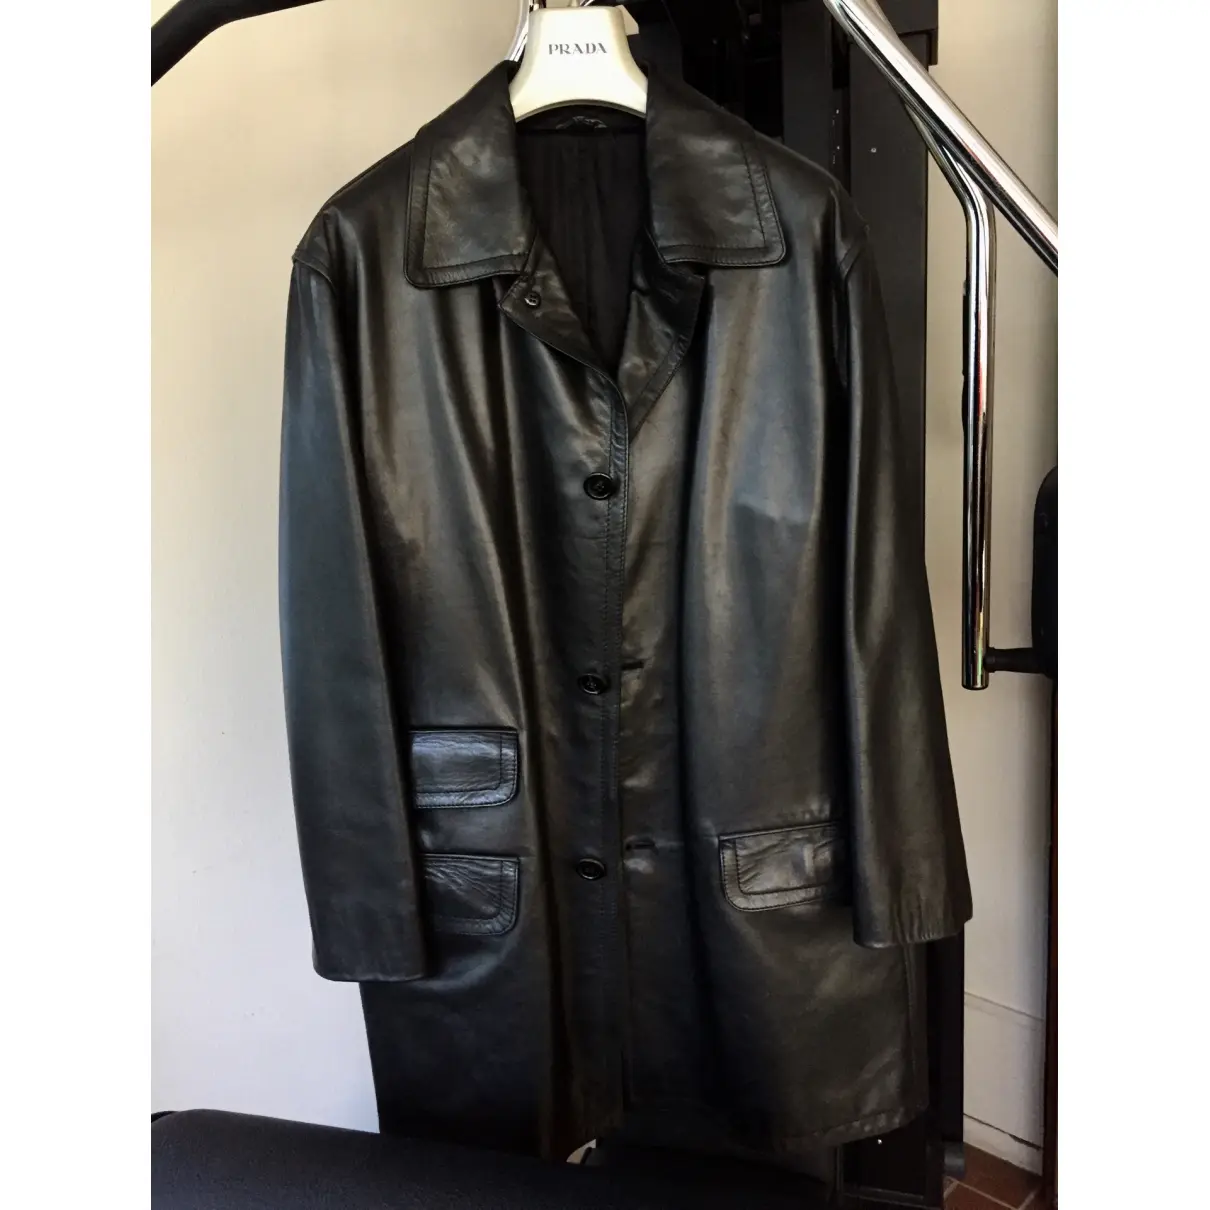 Buy Prada Leather coat online